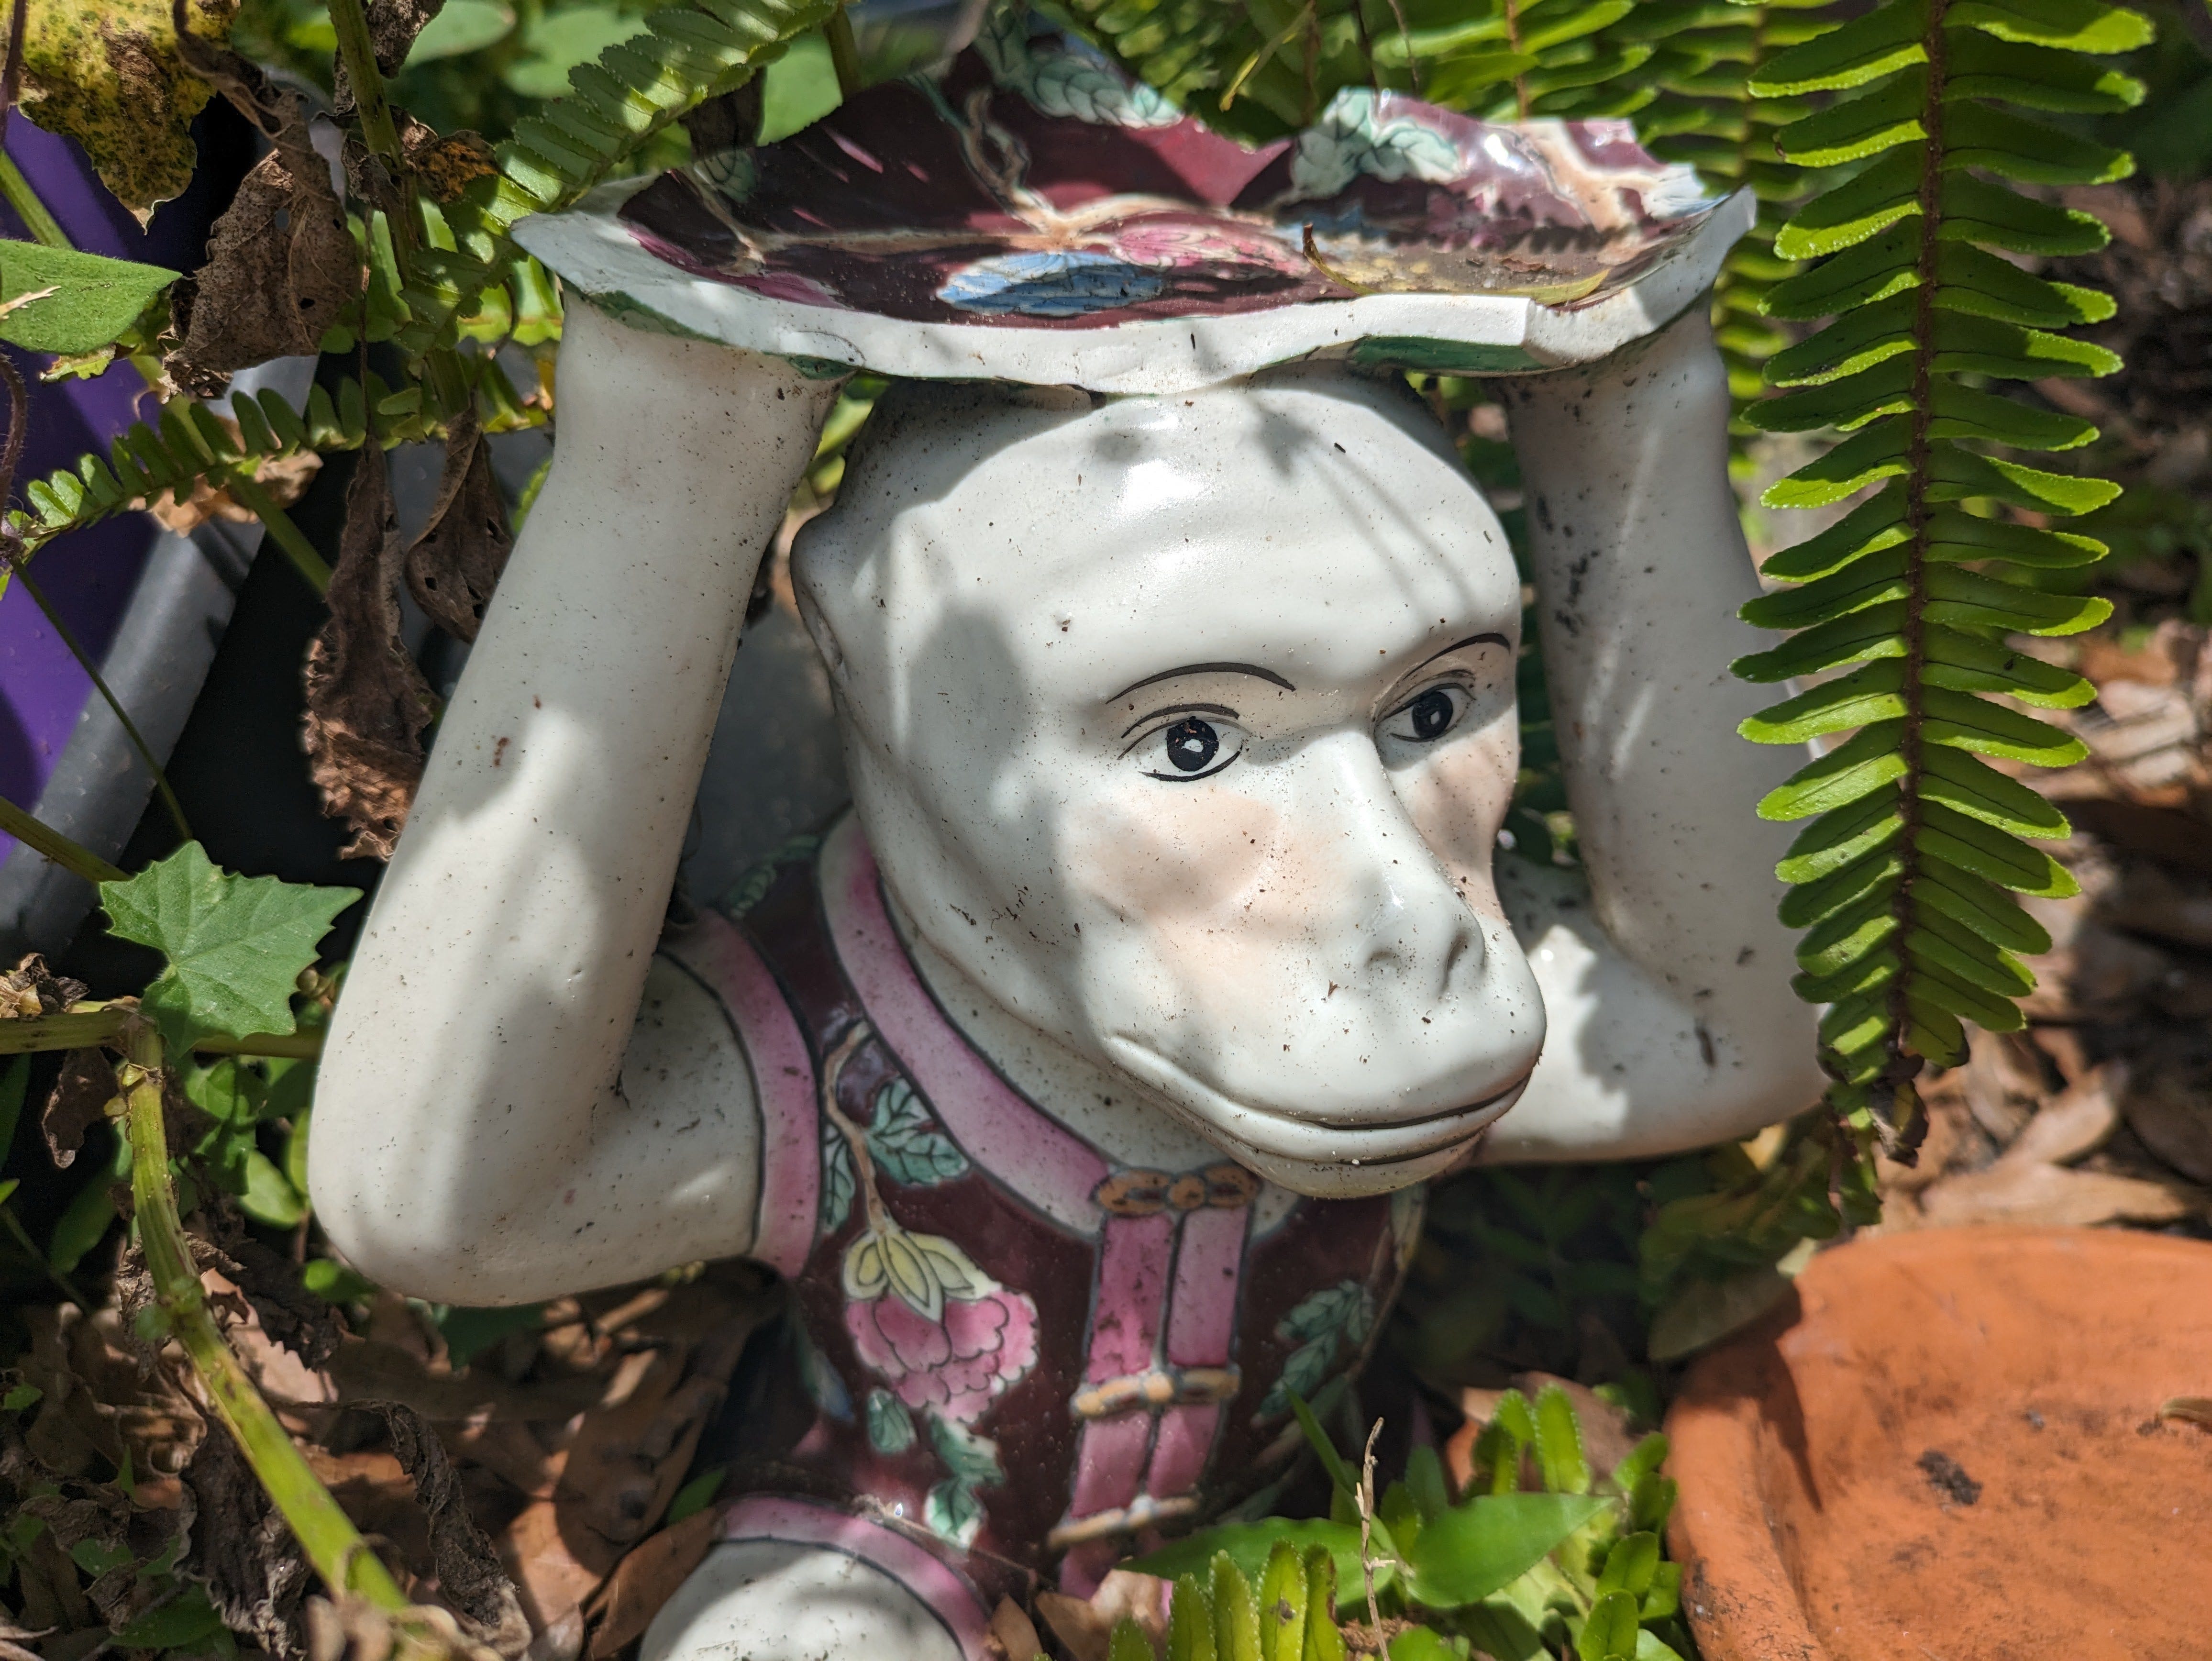 Main camera shot of ceramic monkey outdoors